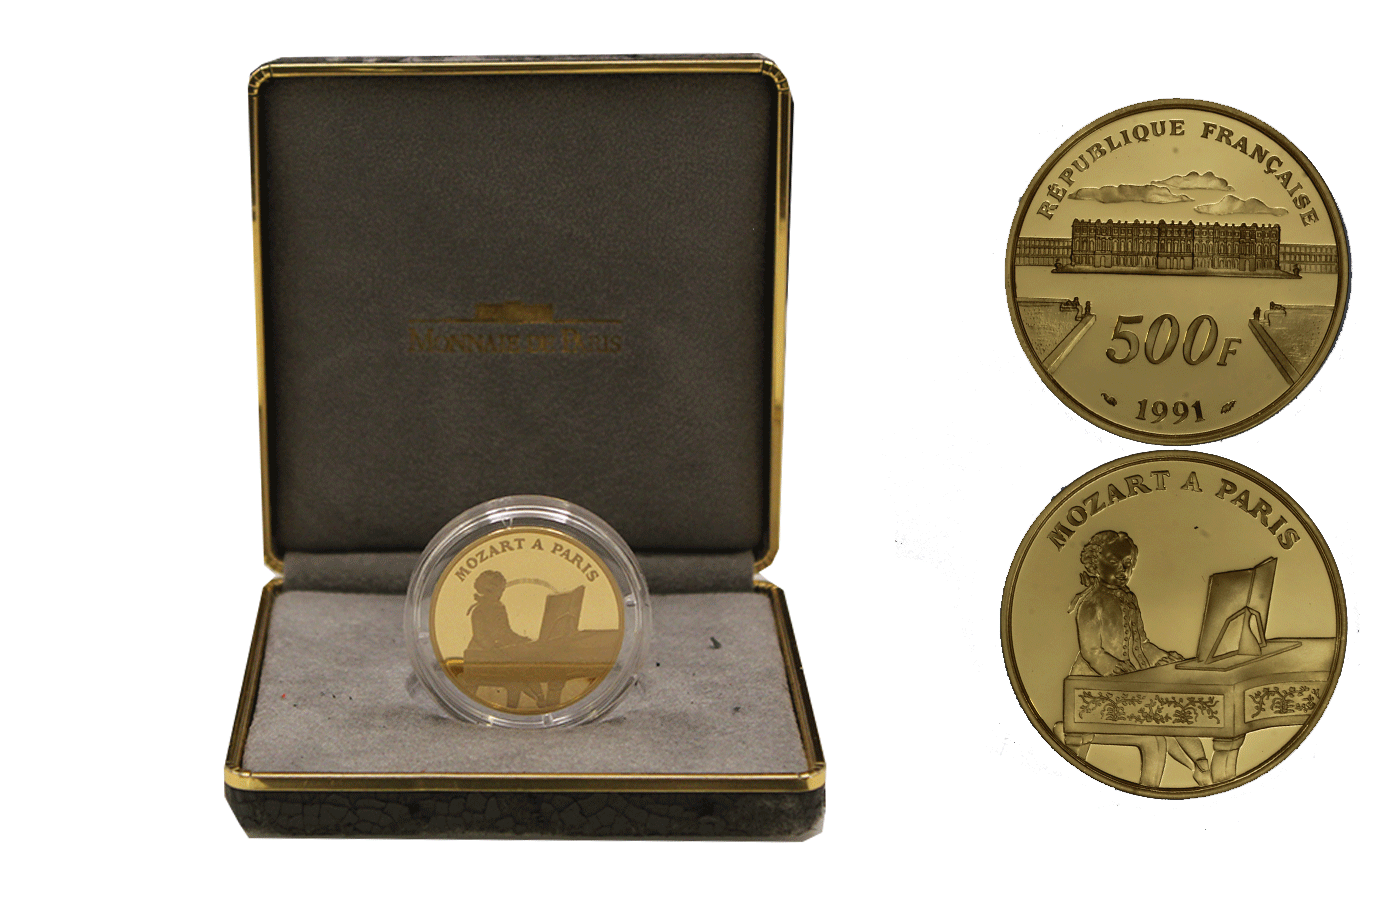 "Mozart a Parigi" - 500 Franchi gr. 17,00 in oro 920/ - In conf. originale